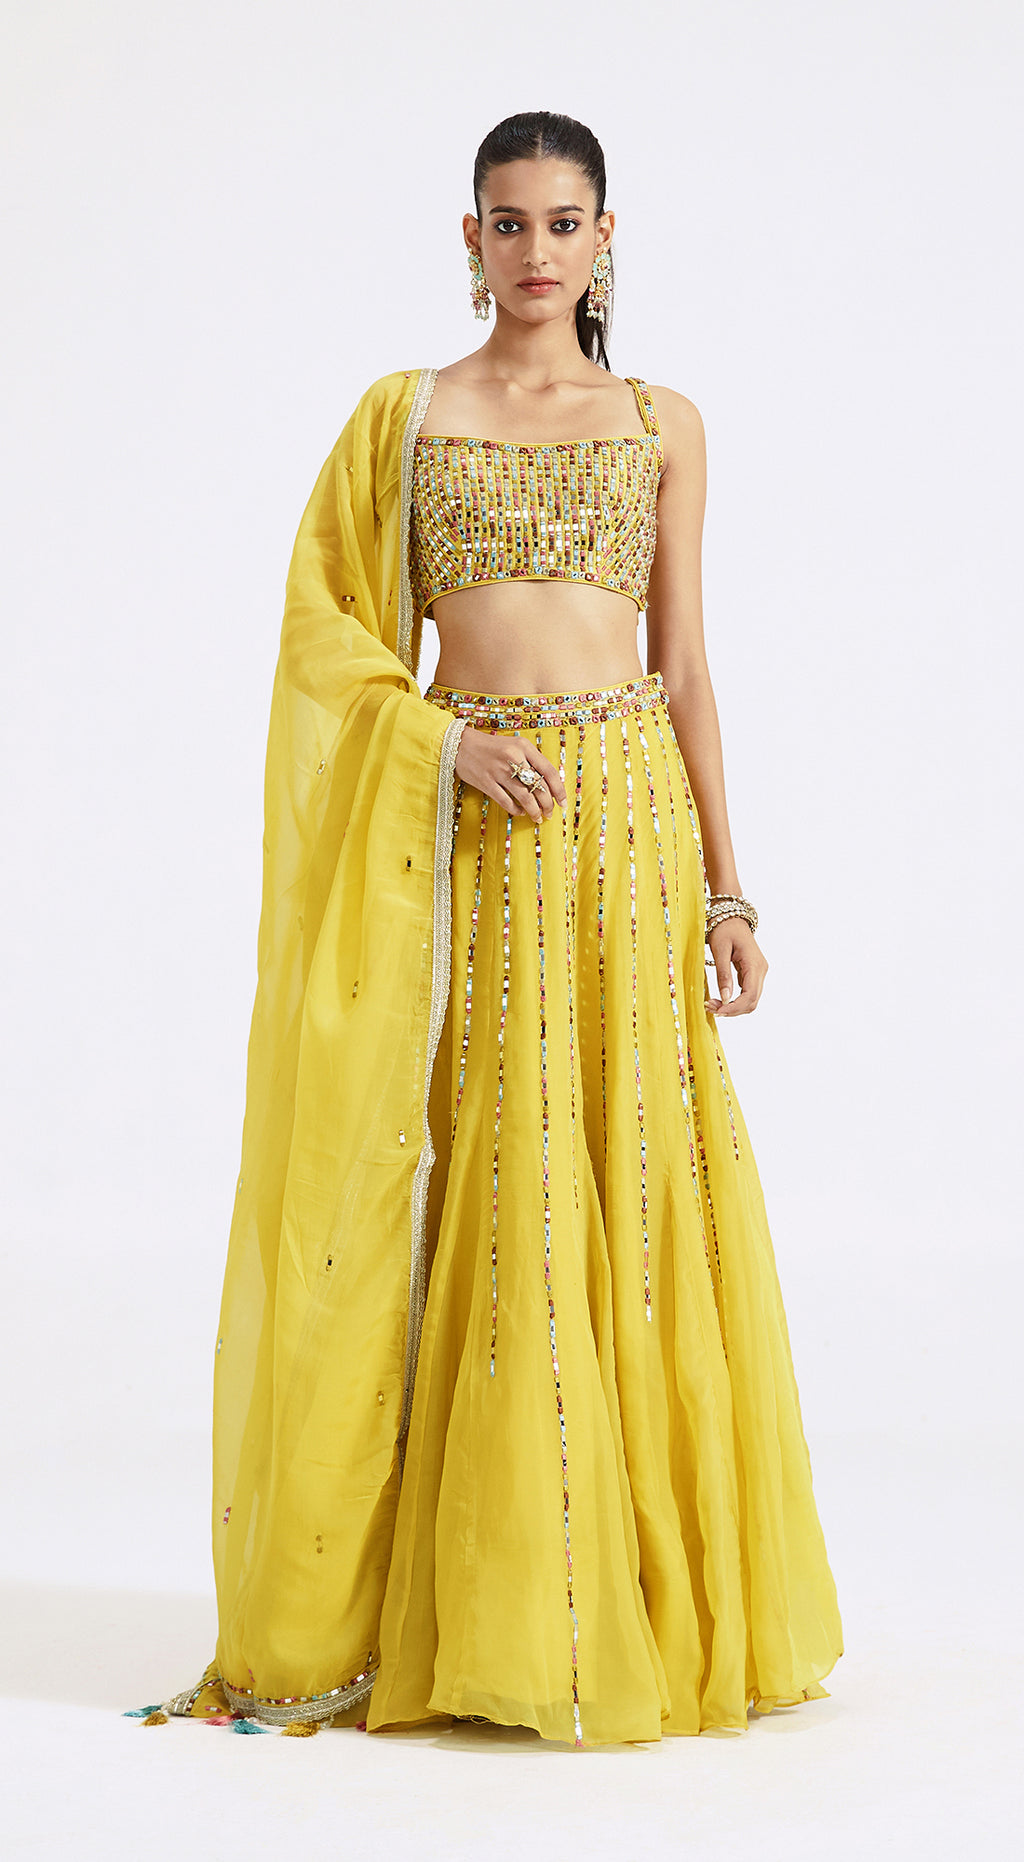 Blush Pink Swarovski Lacha | Indian gowns dresses, Dress indian style,  Designer dresses indian